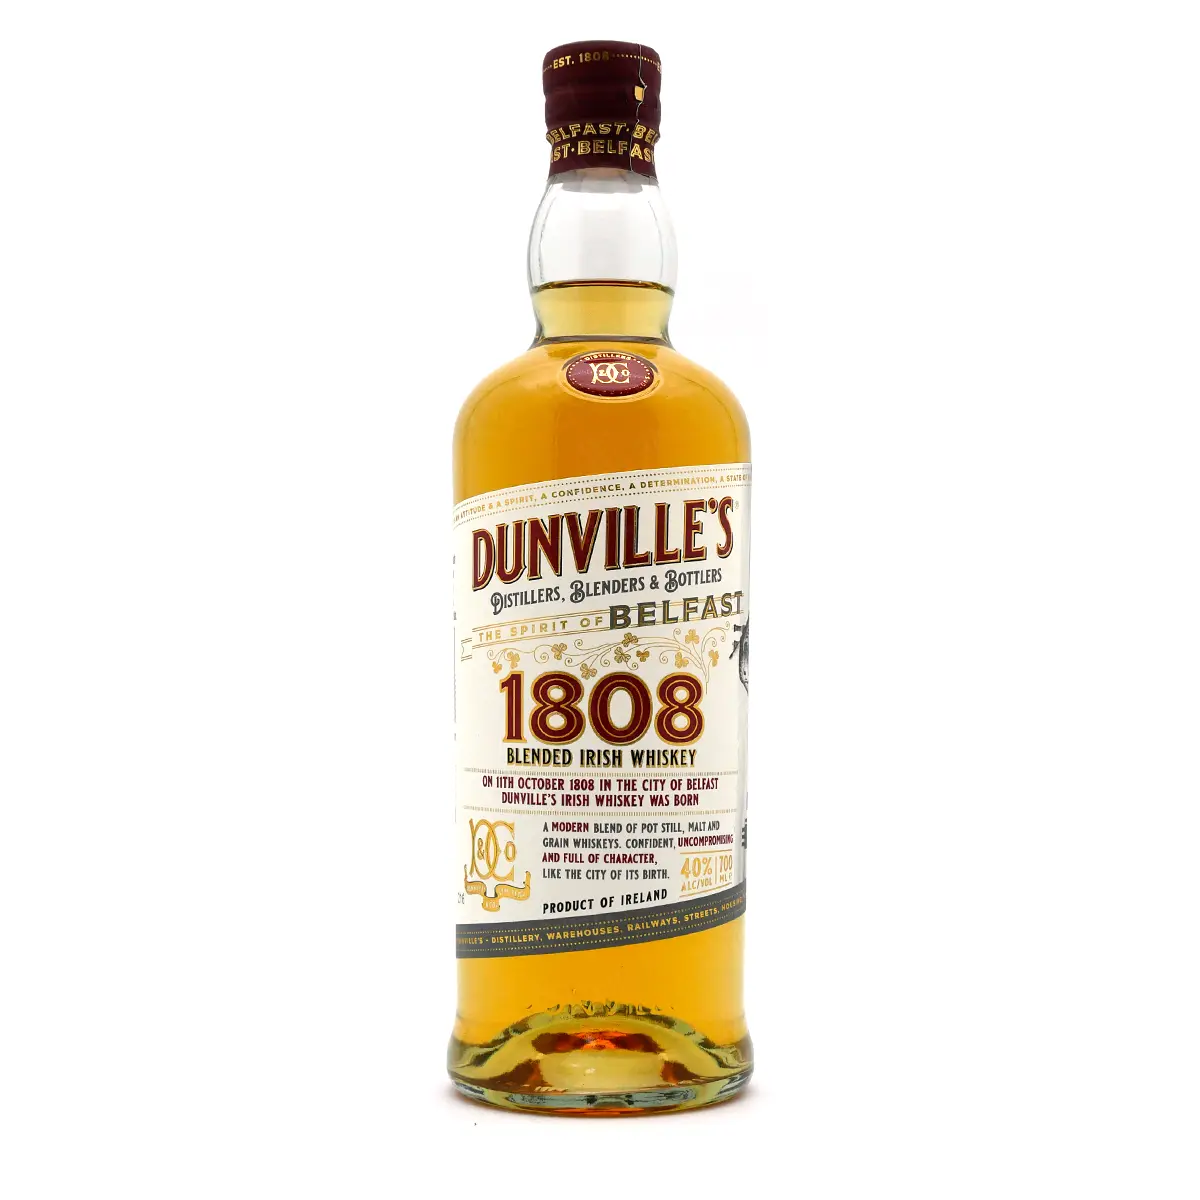 Dunville's | 1808 Blended Irish Whiskey